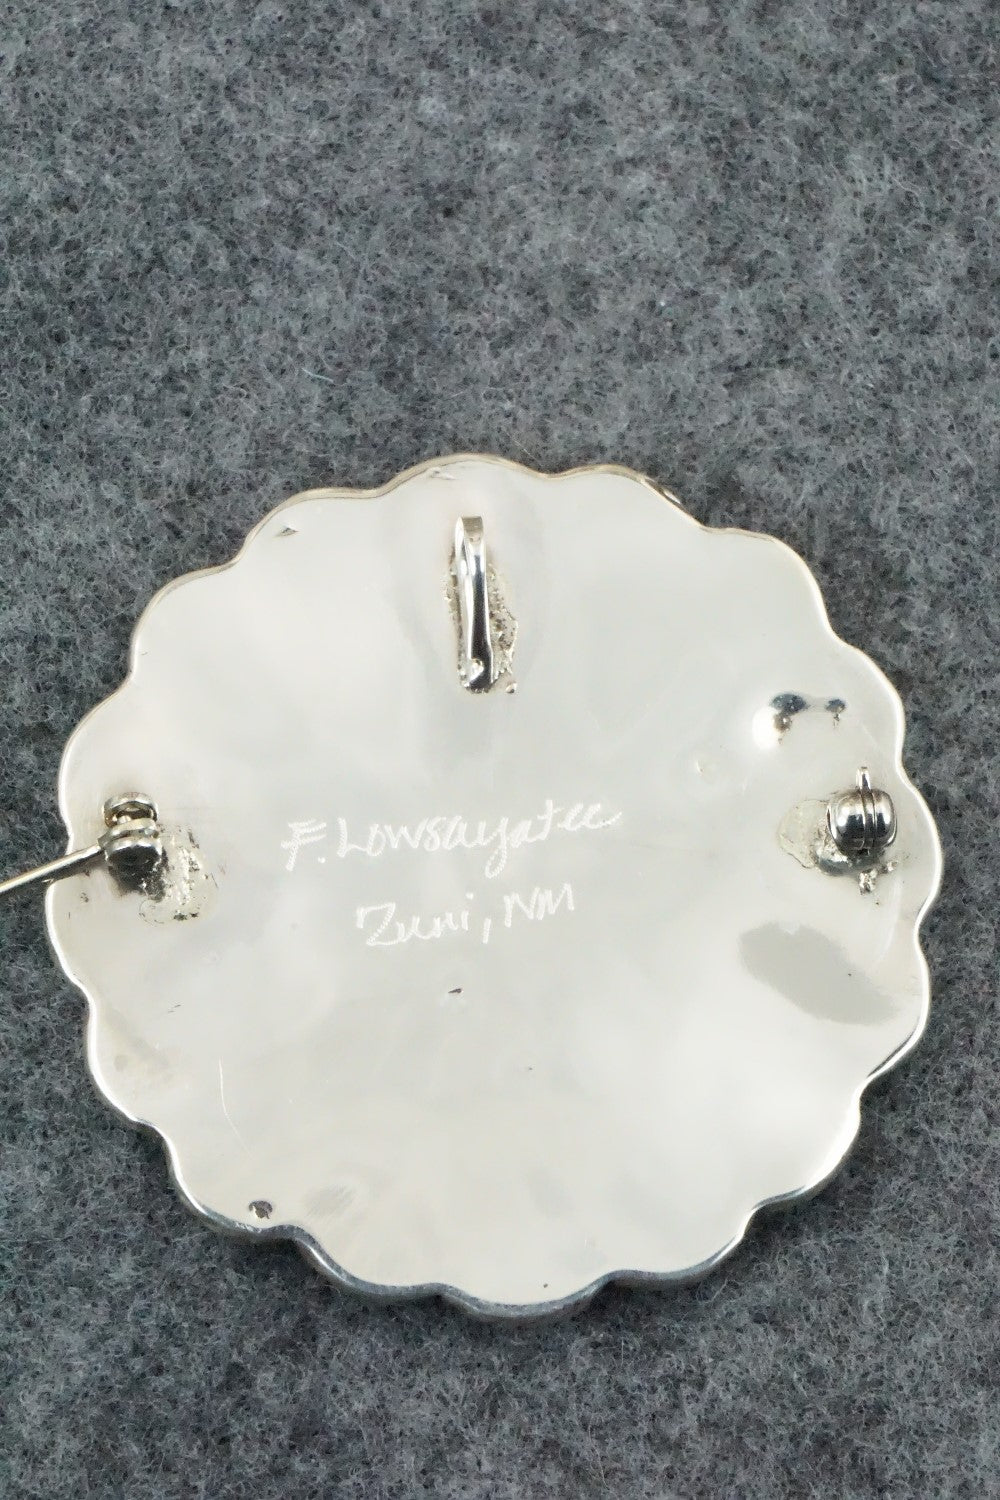 Turquoise & Sterling Silver Pendant/ Pin - Faye Lowsayatee